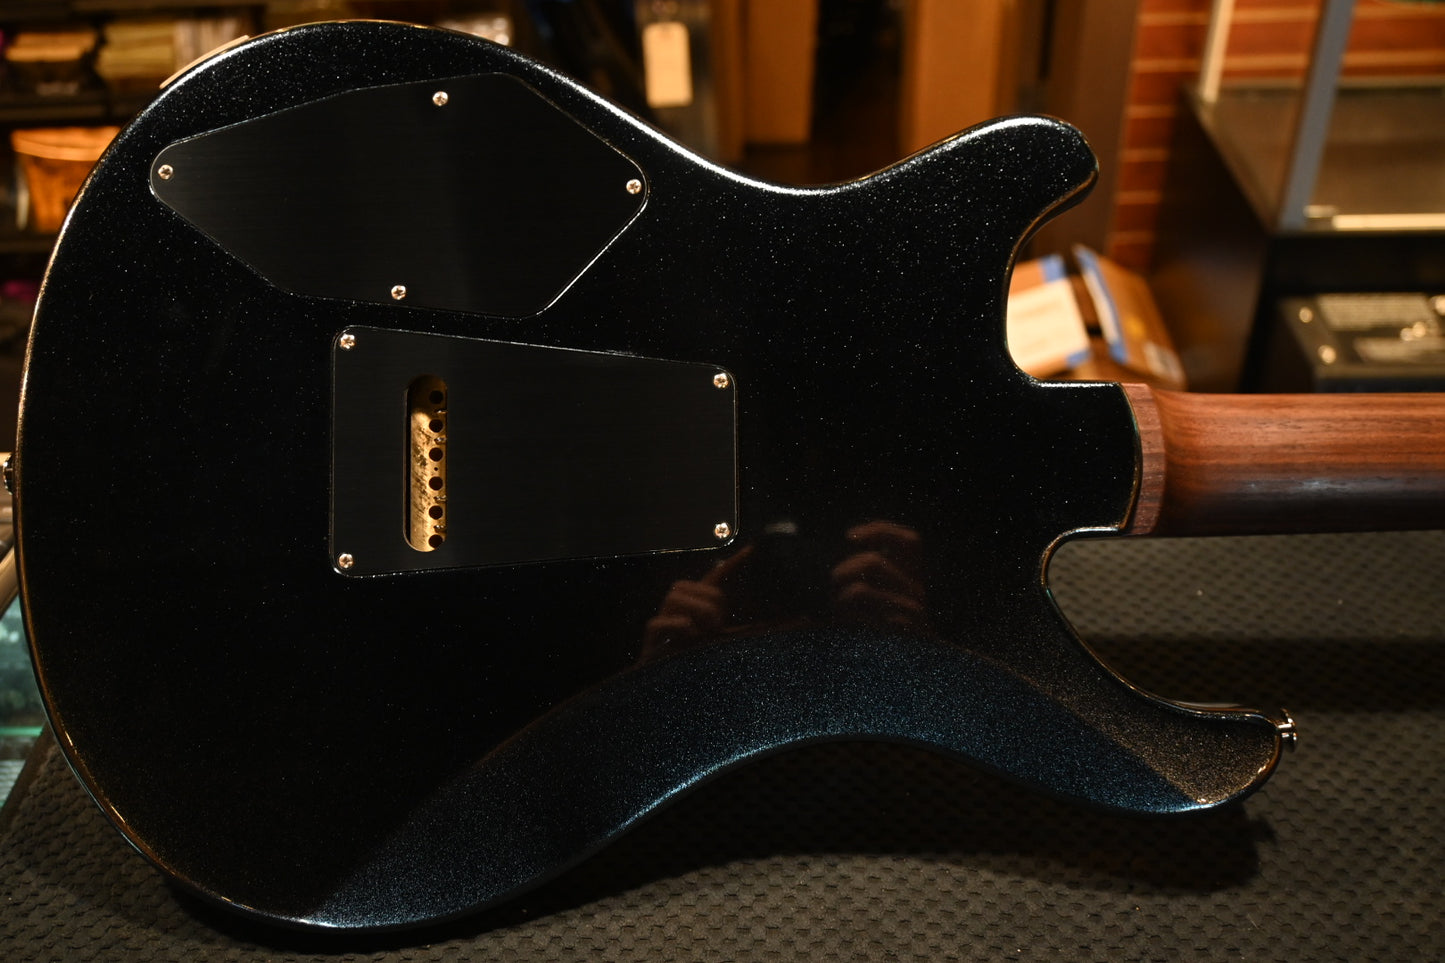 PRS 509 Rosewood Neck Cocobolo Fingerboard - Charcoal Metallic Guitar #2663 - Danville Music